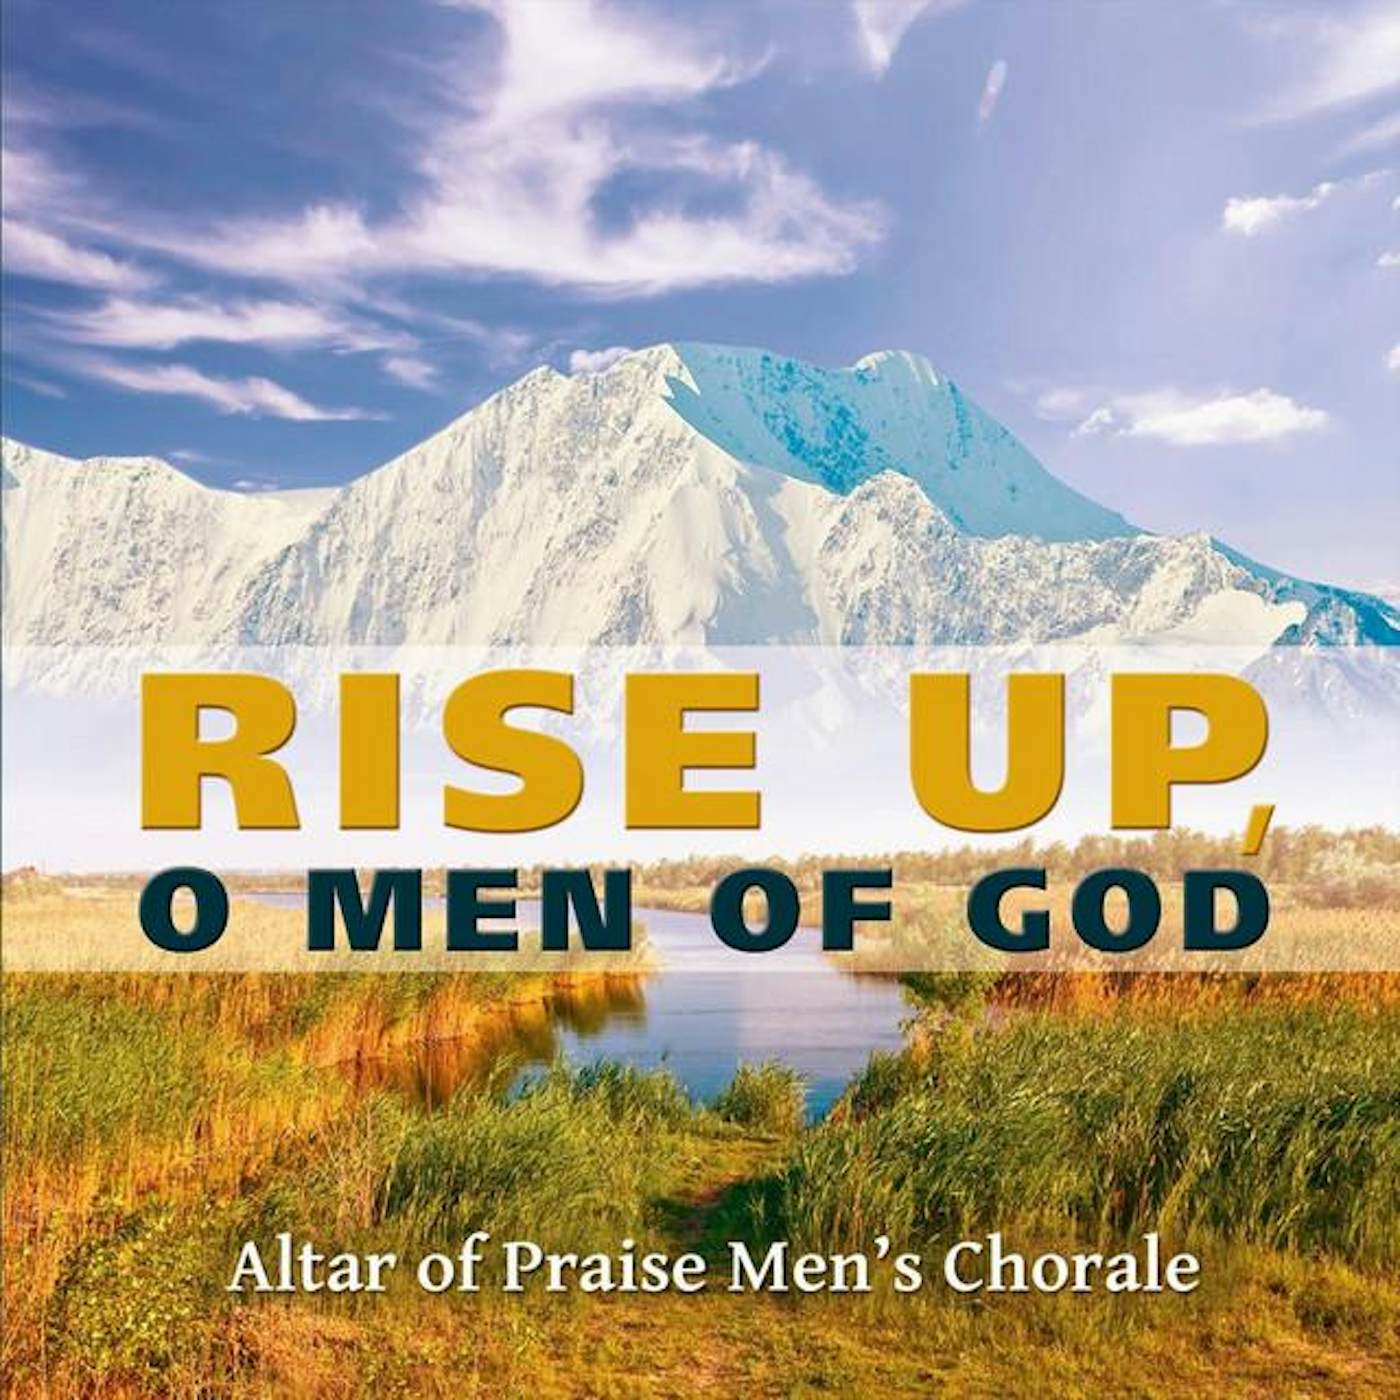 Altar of Praise Men's Chorale